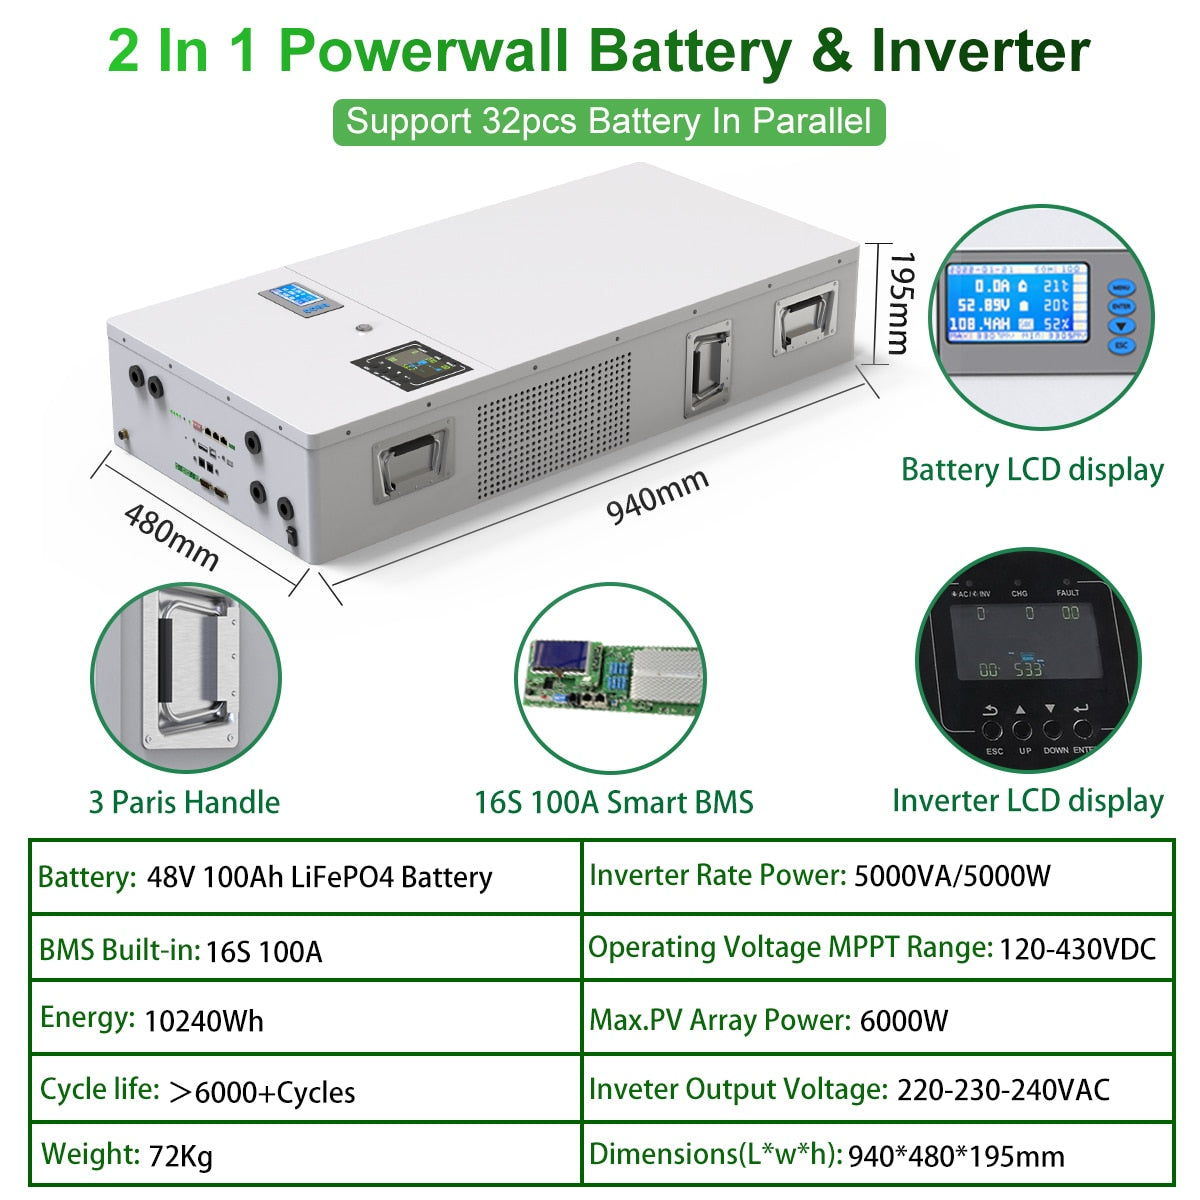 2 In 1 Powerwall Battery & Inverter Support 32p